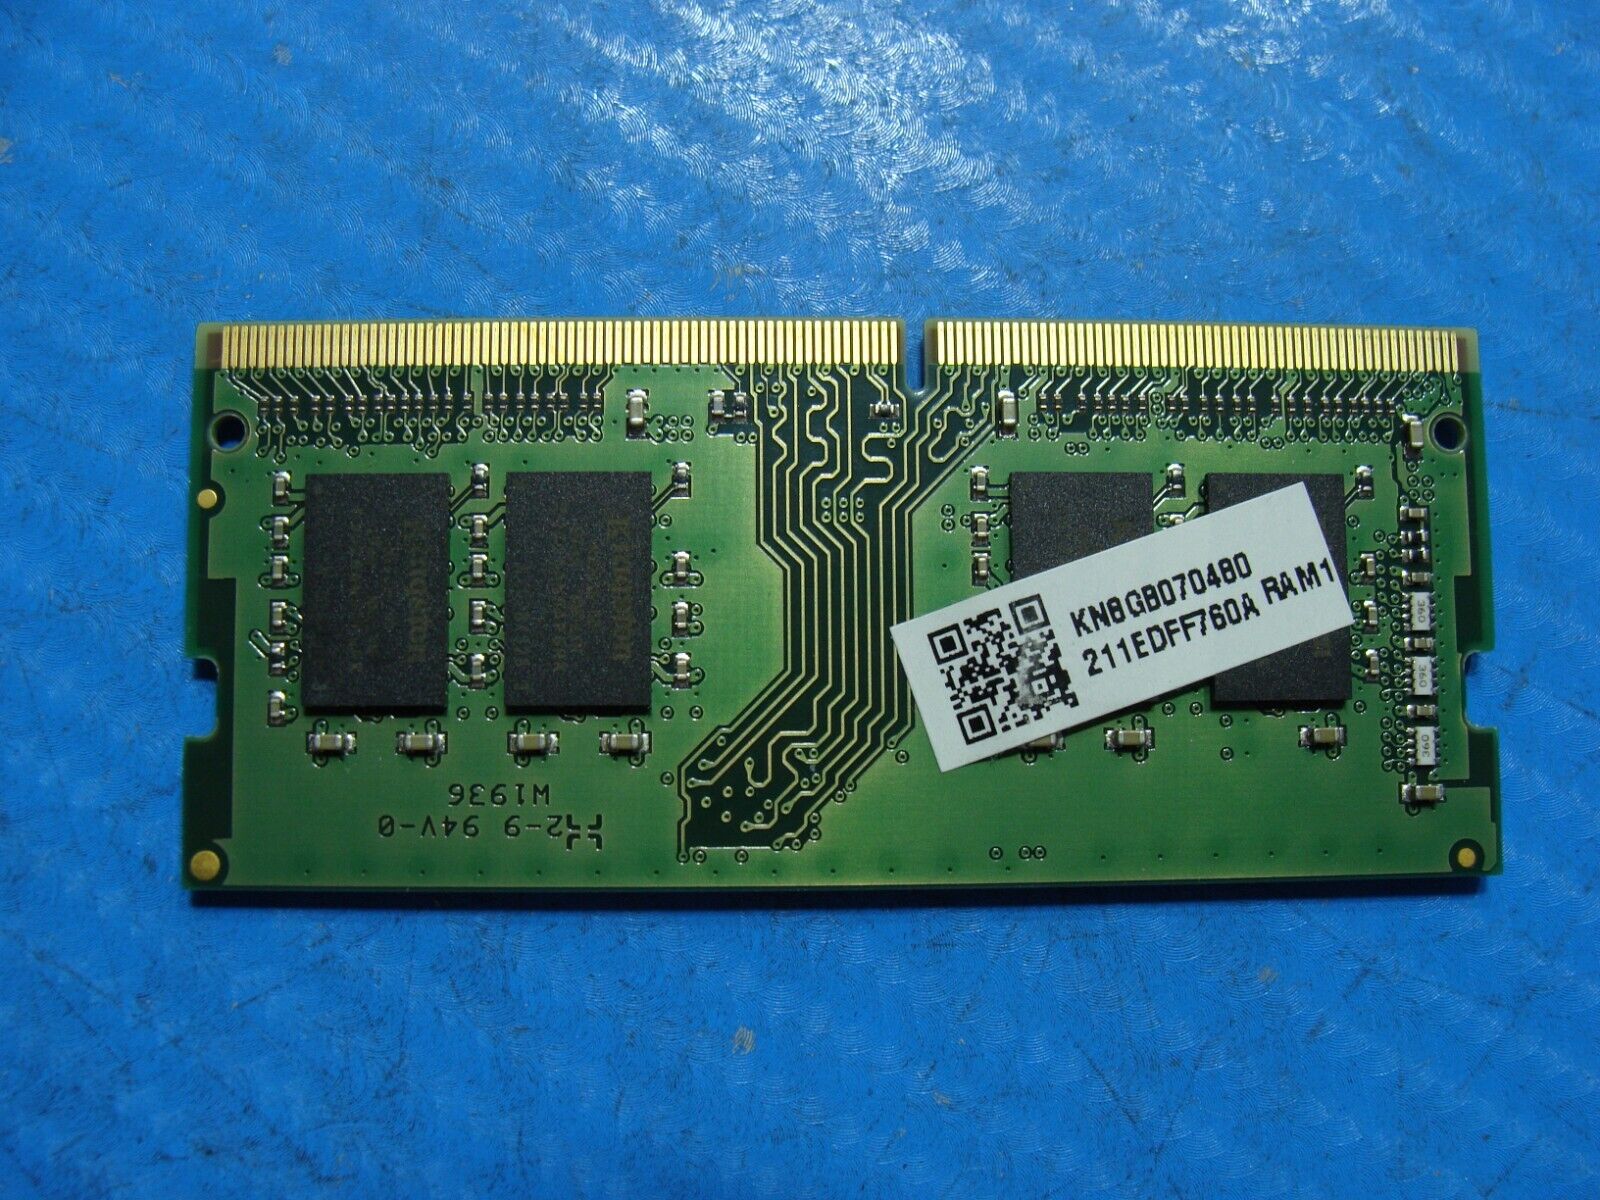 Acer A515-55-56VK Kingston 8GB 1Rx8 PC4-2666V SO-DIMM Memory RAM ACR26D4S9S8KA-8